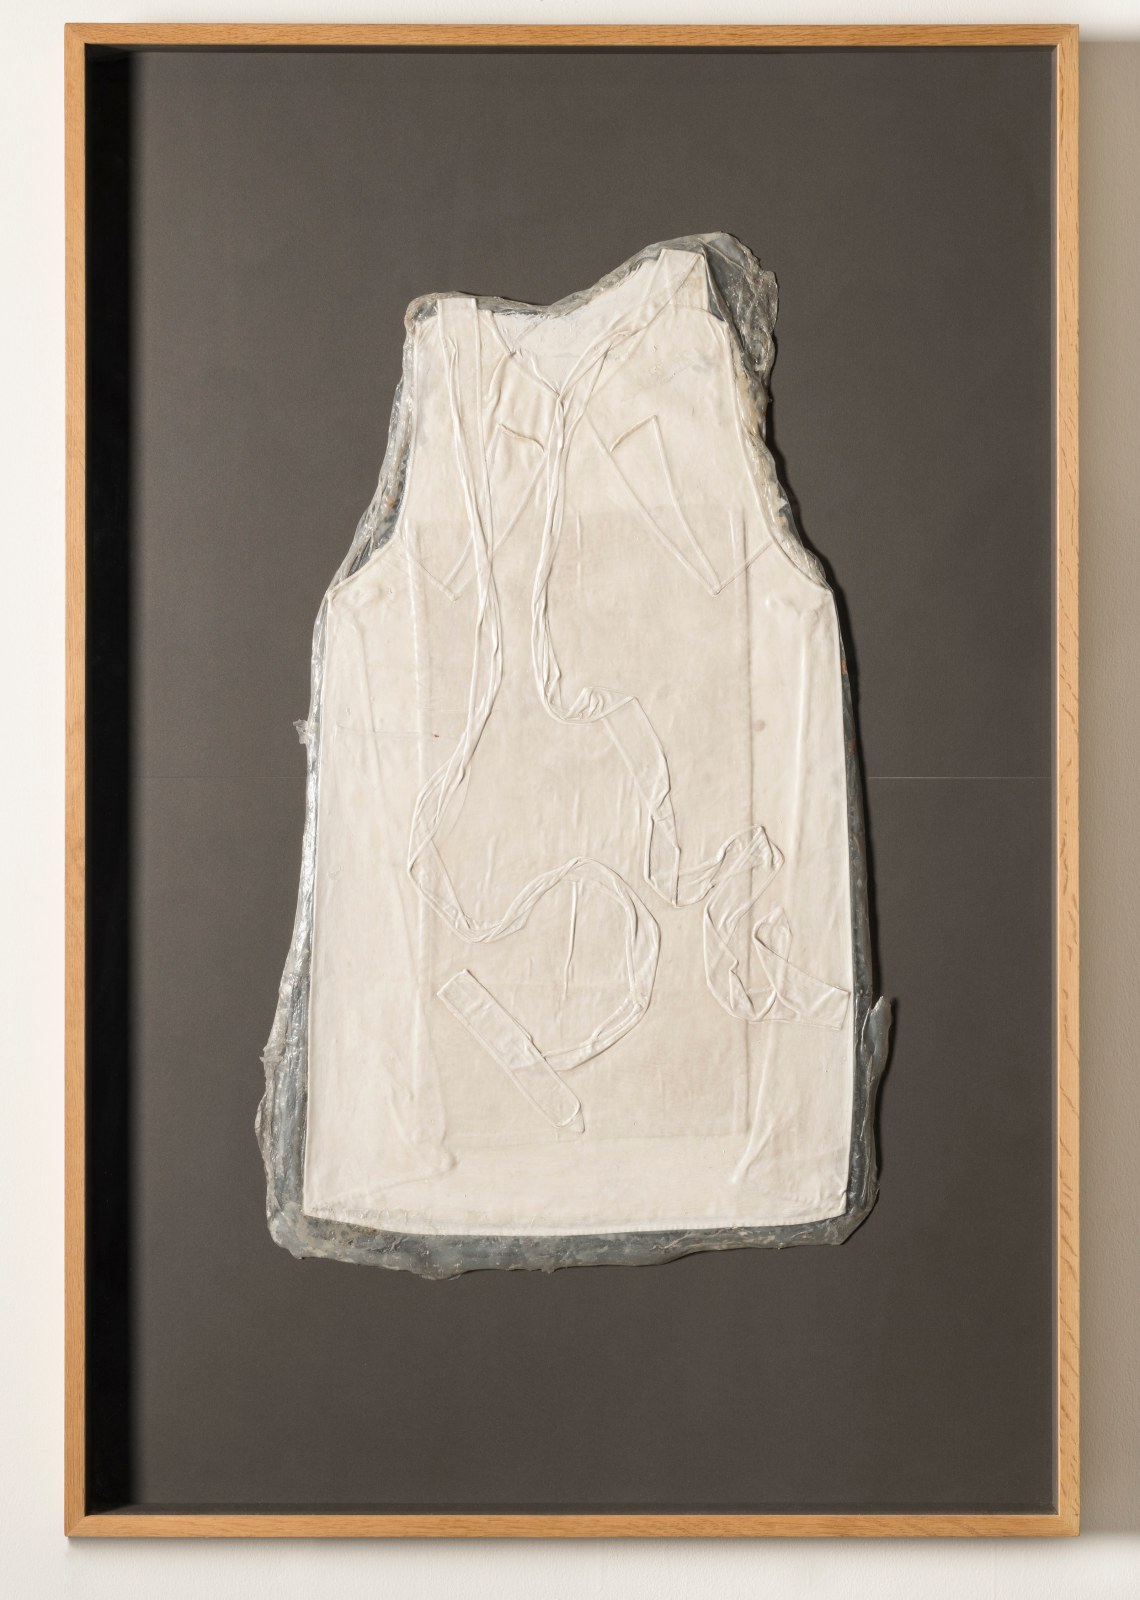 HEIDI BUCHER Untitled (Kuchenschurze / White Apron), ca. 1975